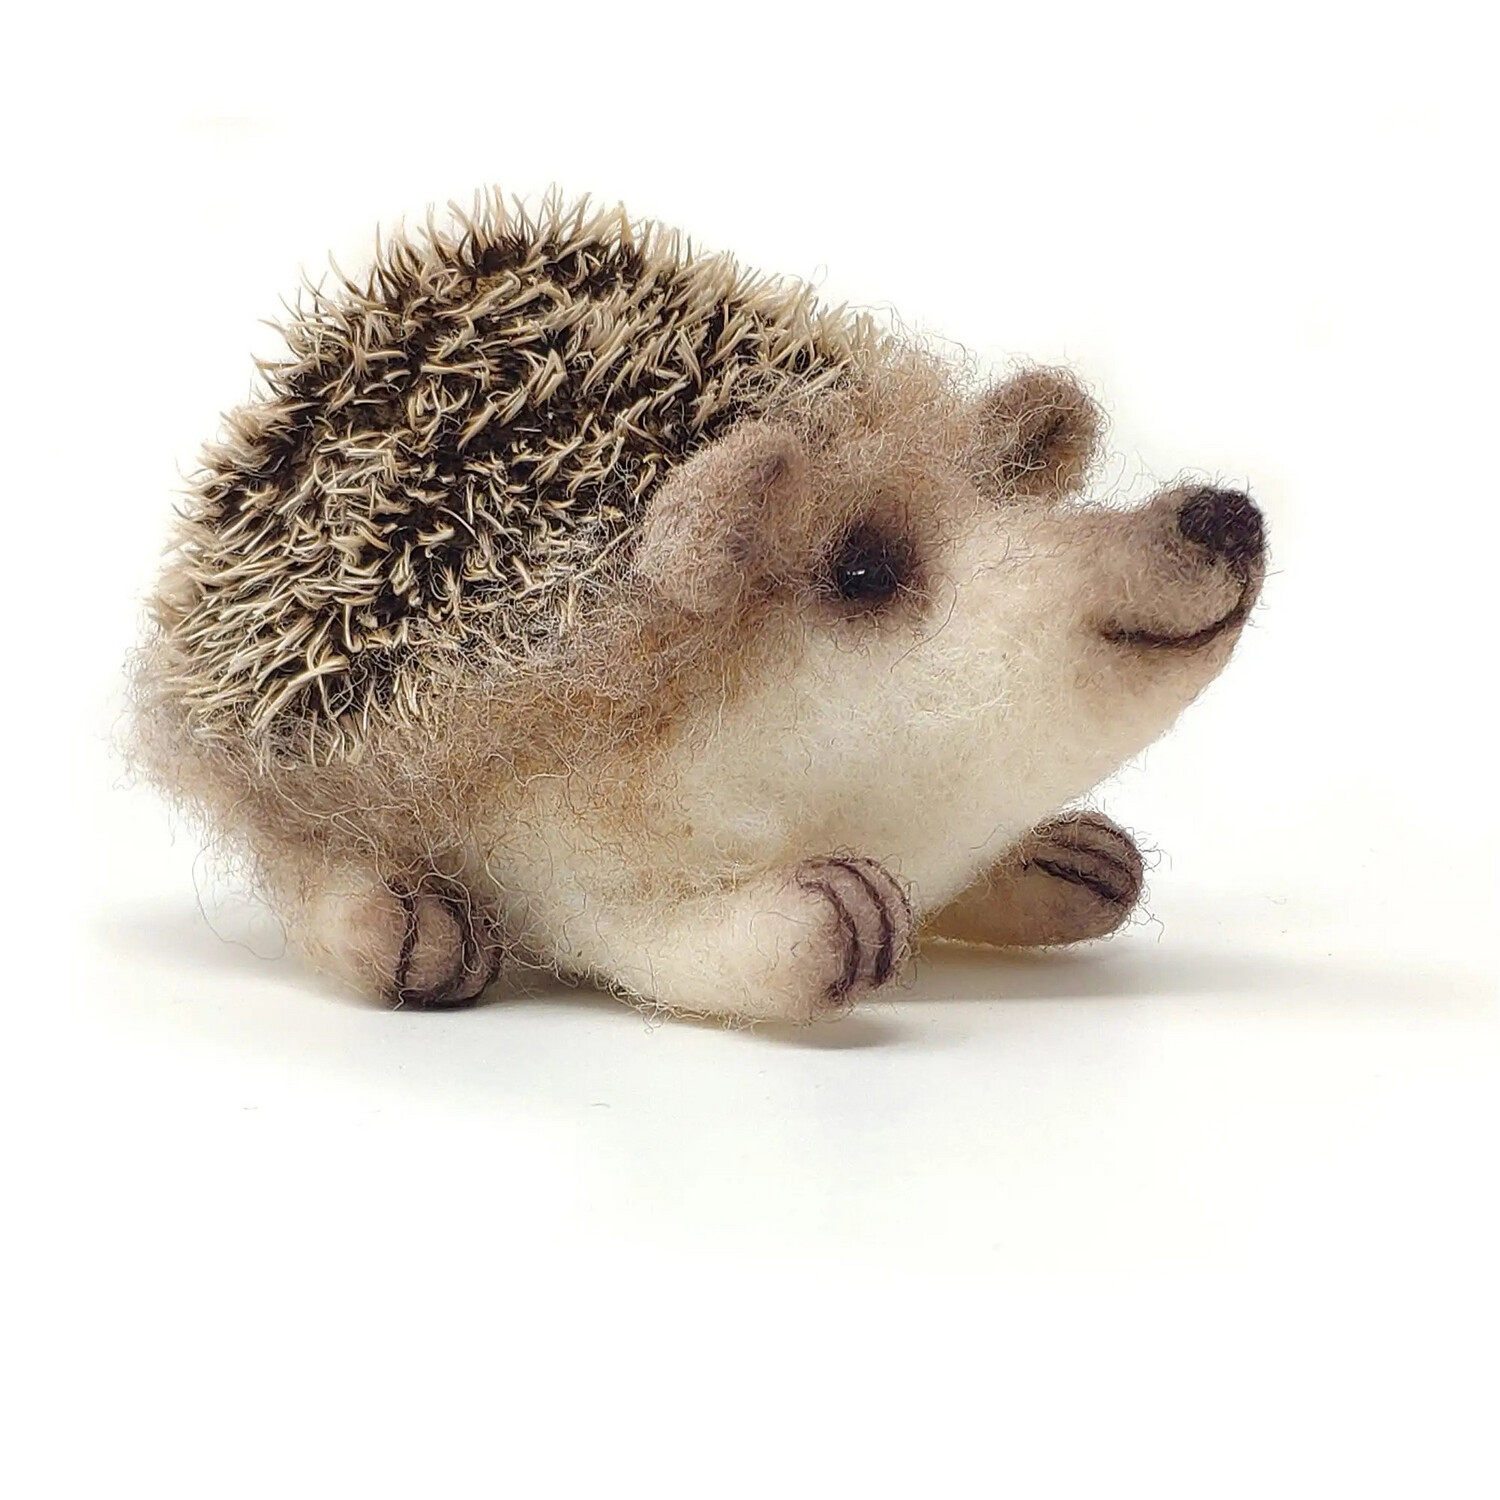 Baby Hedgehog Needle Felting Craft Kit For Adults